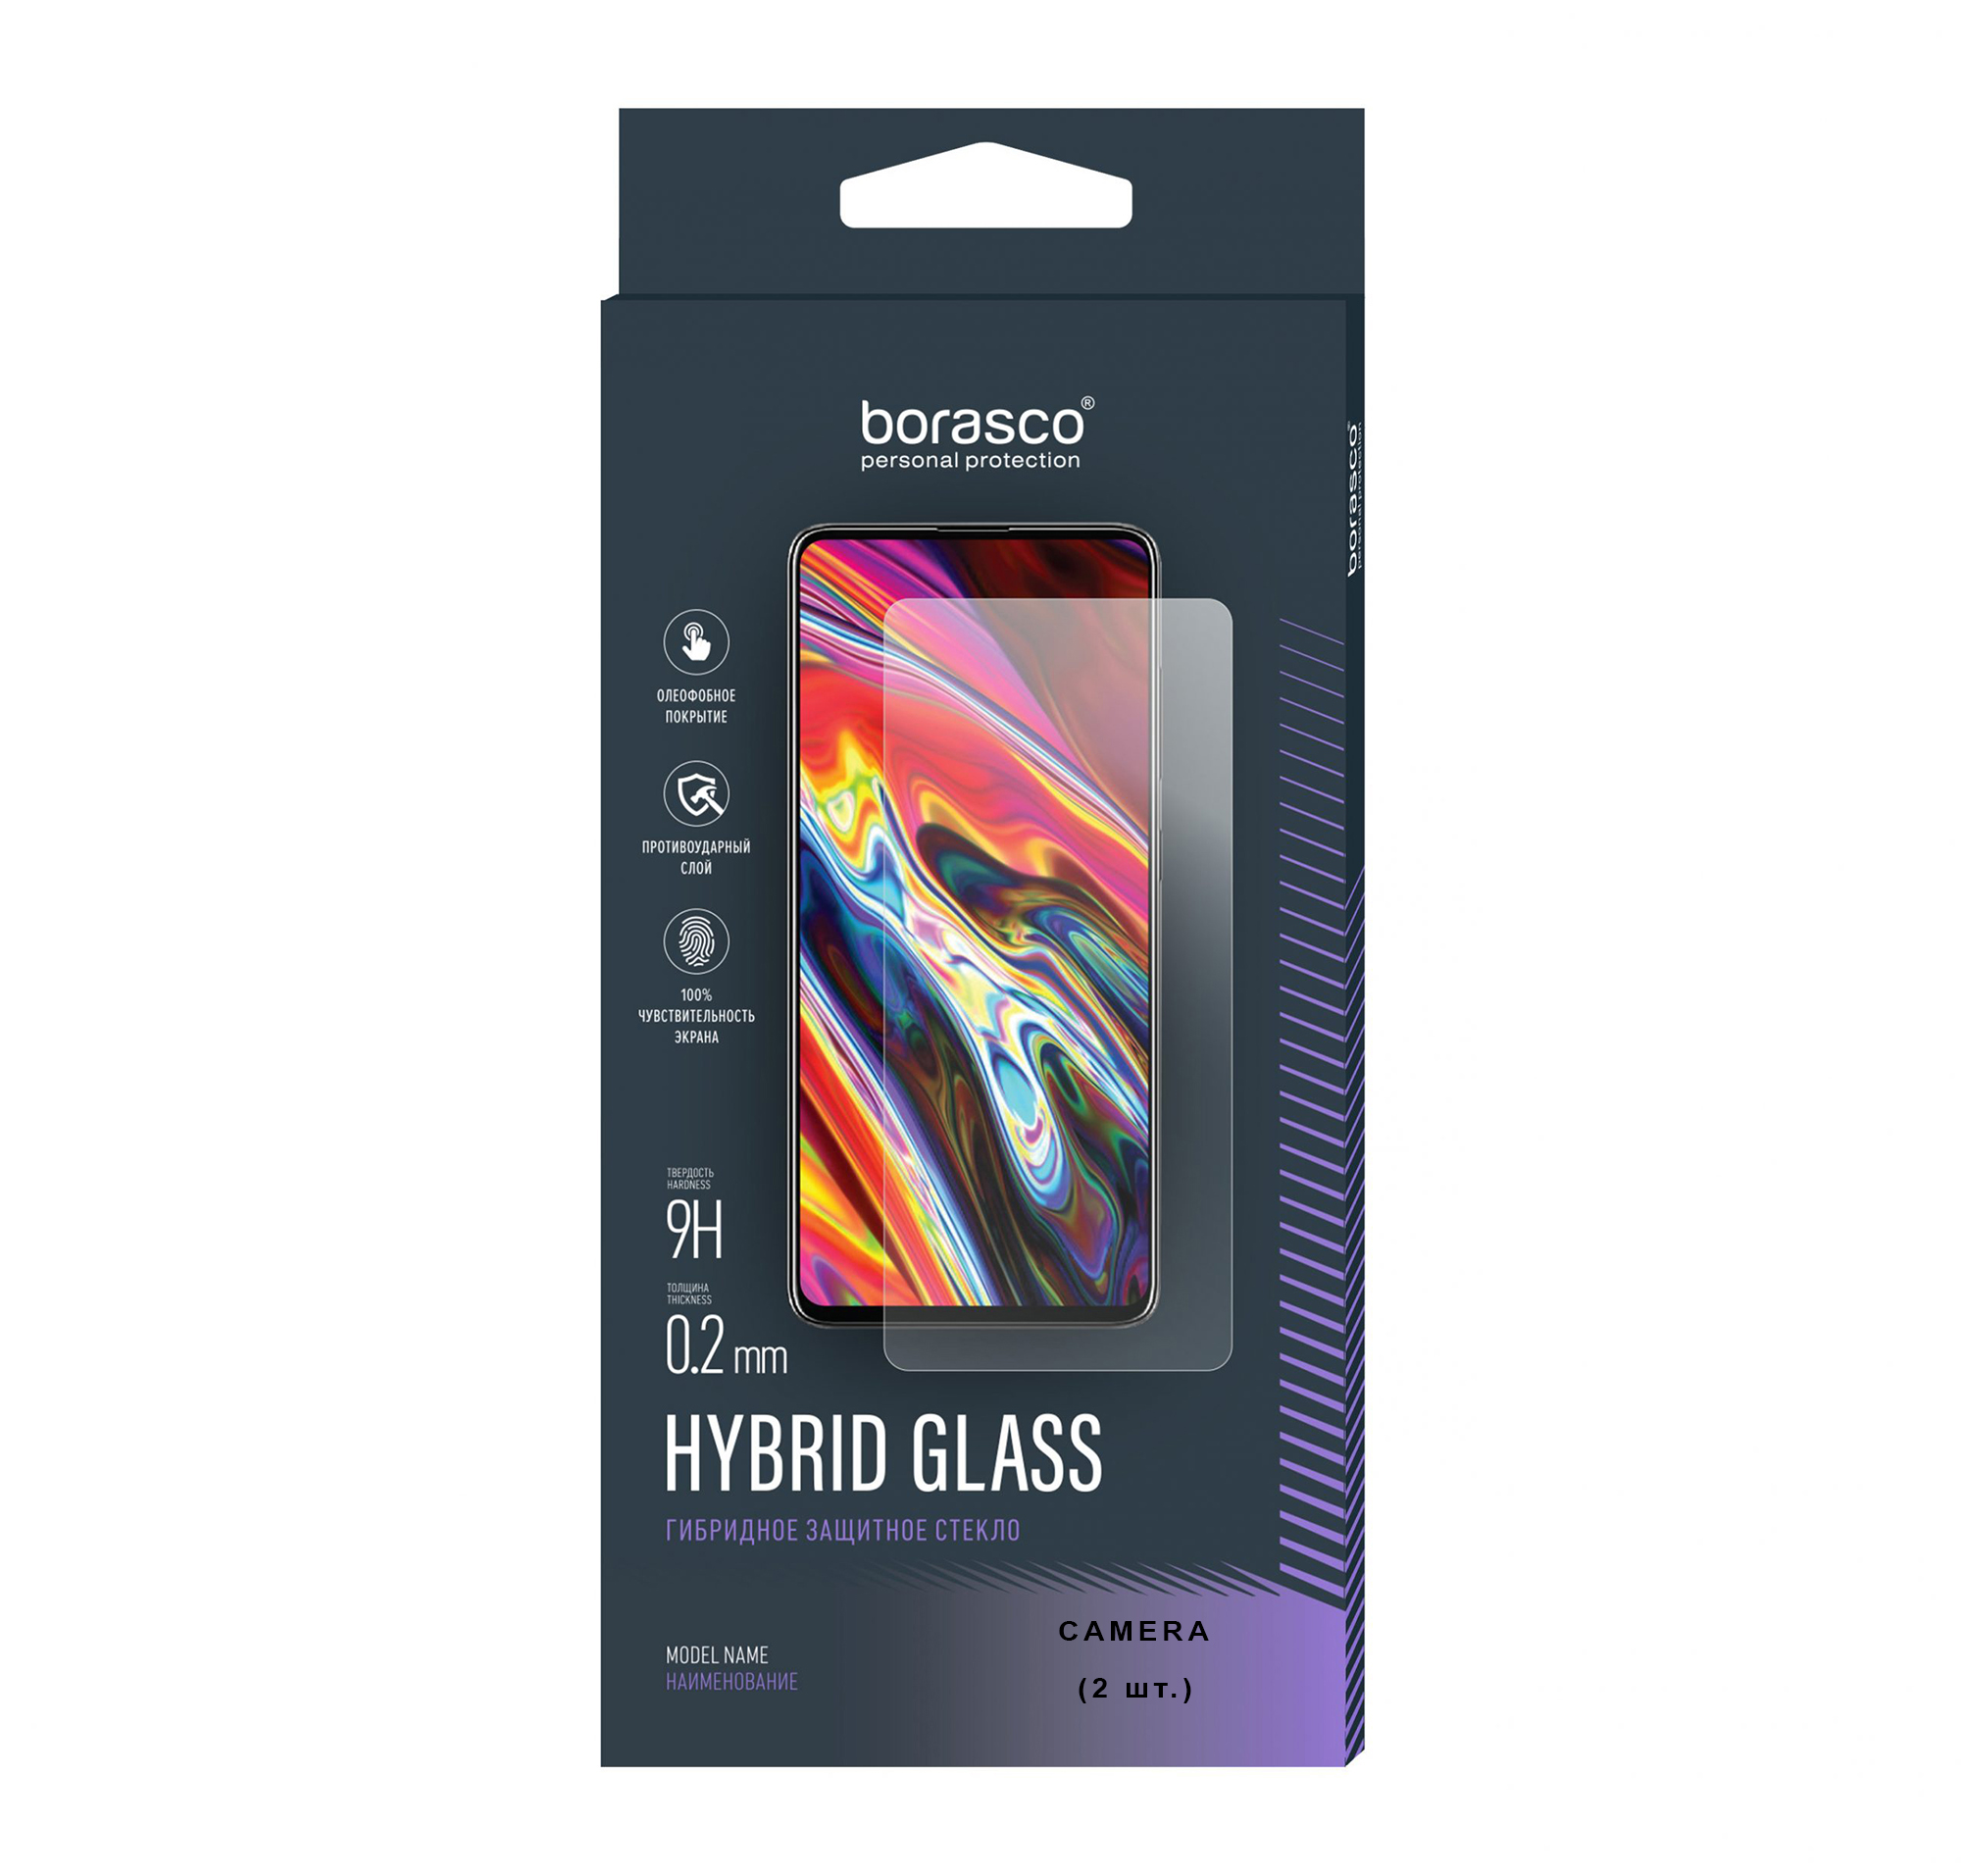 Защитное стекло (Экран+Камера) Hybrid Glass для Apple Iphone 7 Plus/ 8Plus защитное стекло на iphone 7plus 8plus back